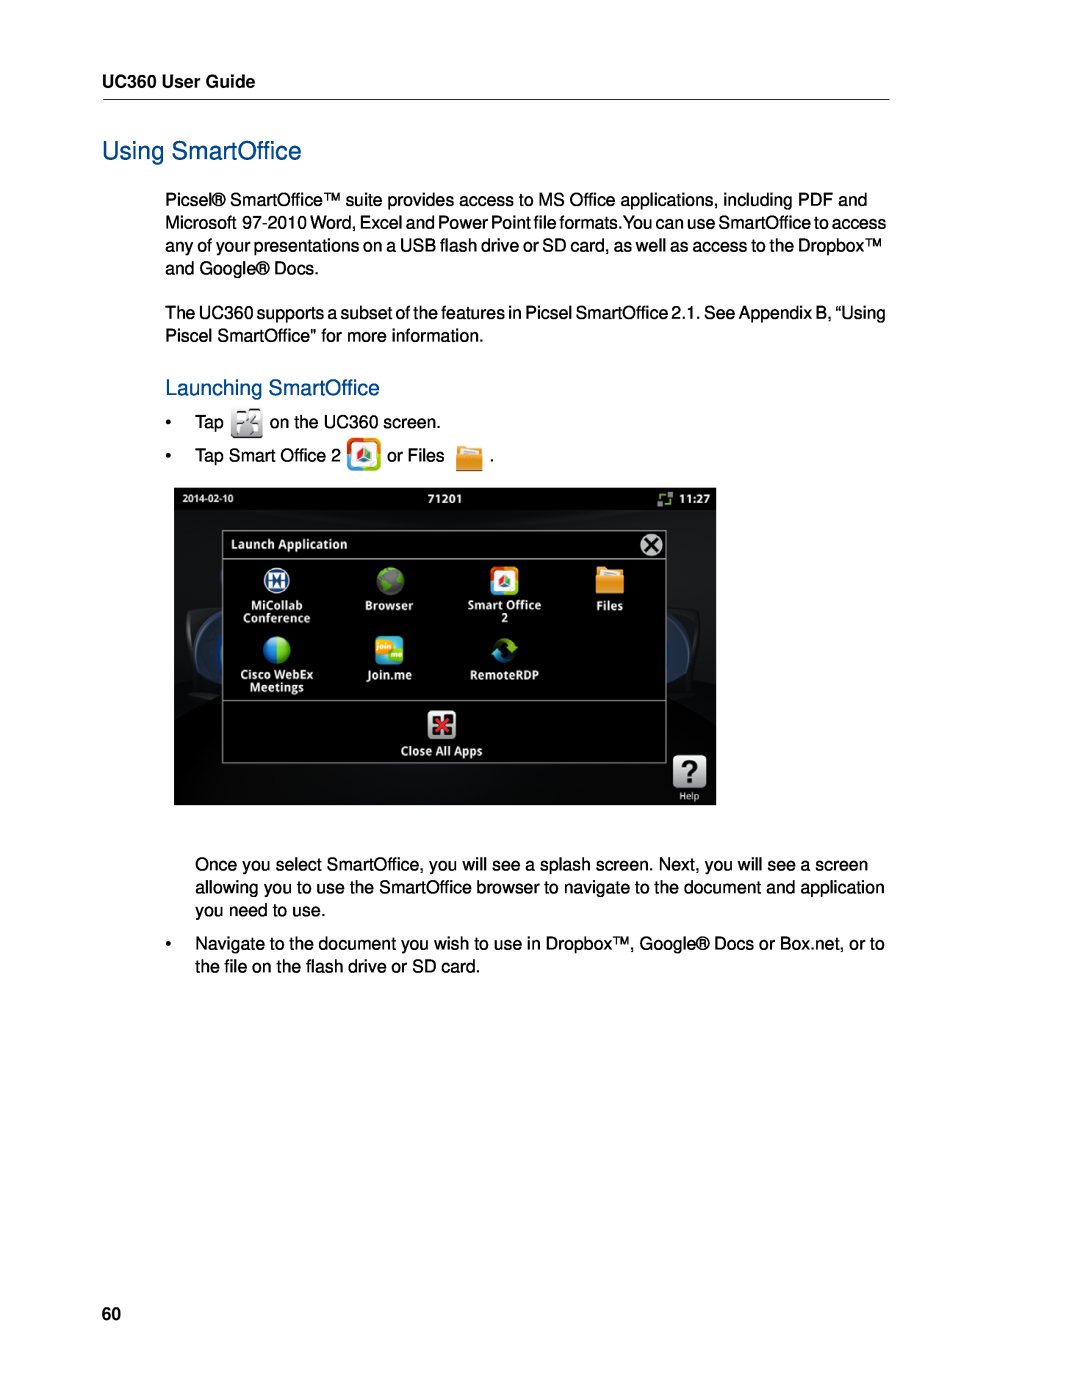 Mitel UC360 manual Using SmartOffice, Launching SmartOffice 